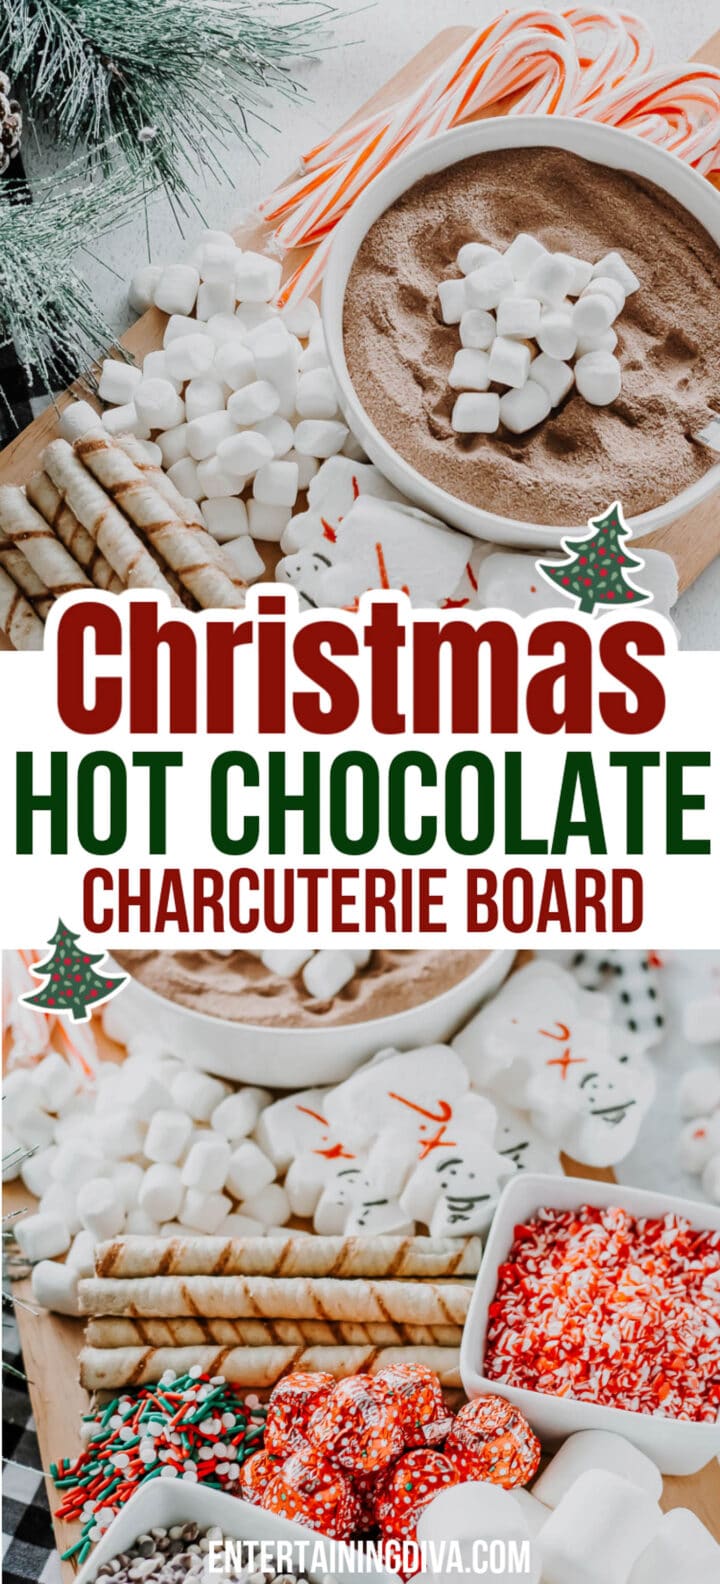 Christmas hot chocolate charcuterie board.